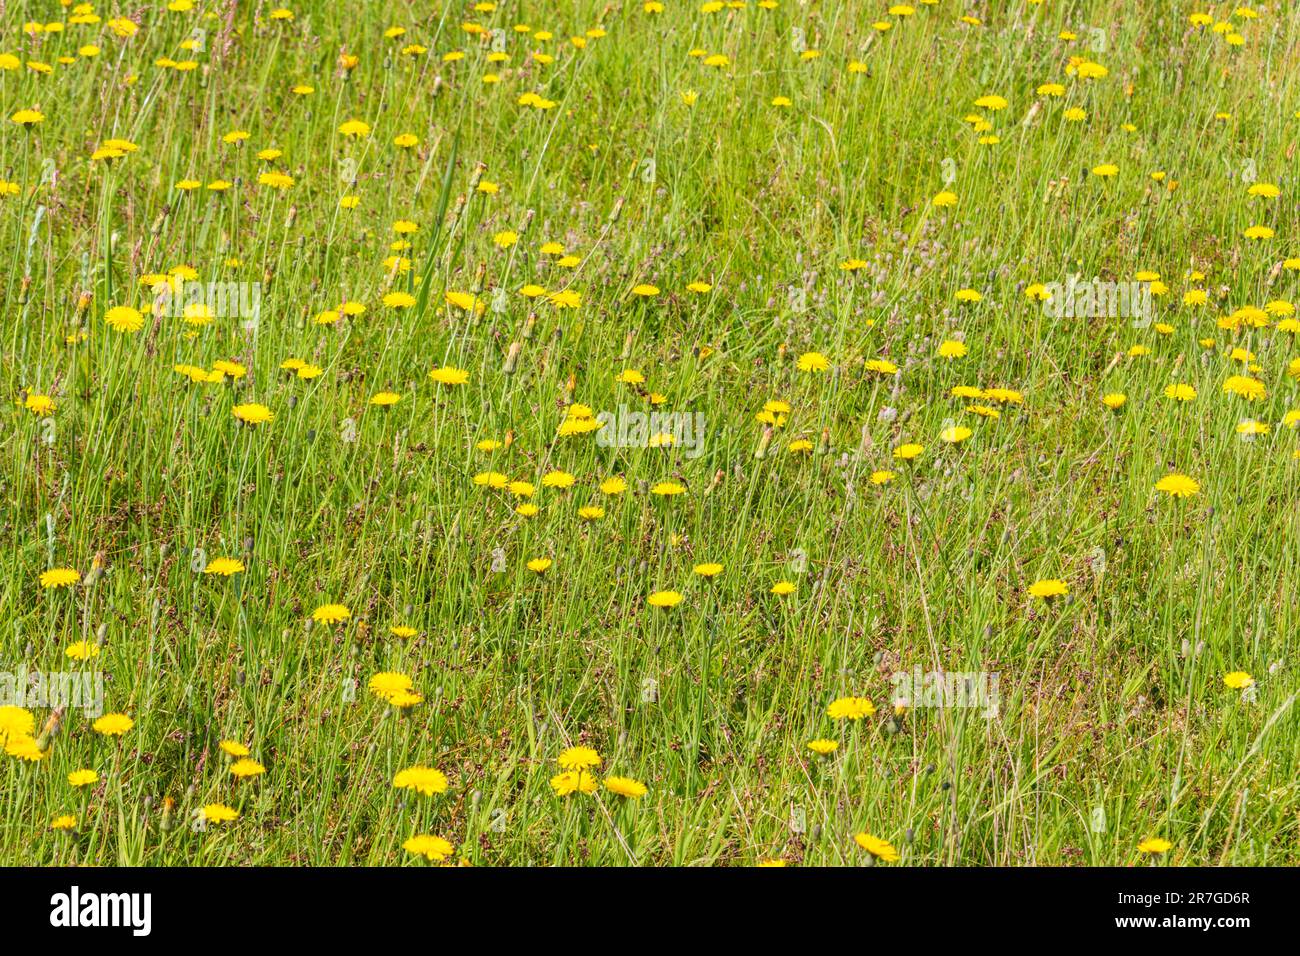 Yellow flatweed (Hypochaeris radicata) flowers among grass on sandy ground, Mezofold, Hungary Stock Photo